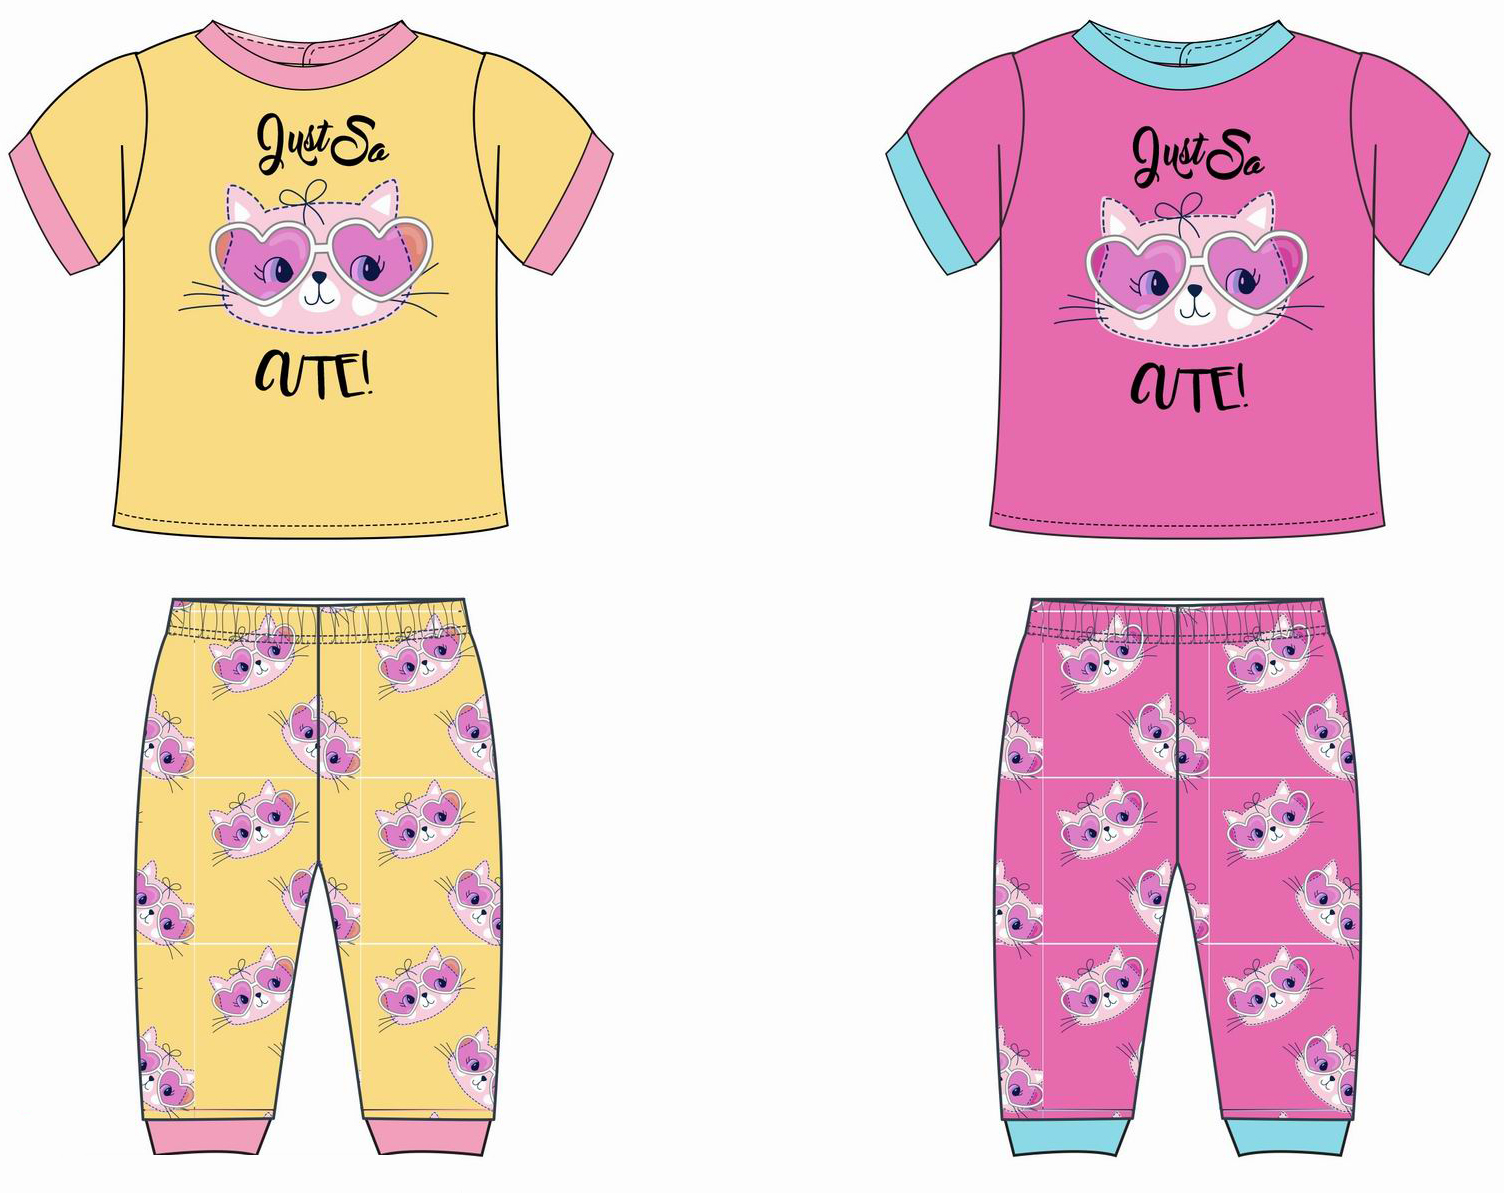 Girl's 2 PC. Short-Sleeve Rib PAJAMAS Sets w/ Just So Cute Cats & Kittens Print - Sizes 6-10